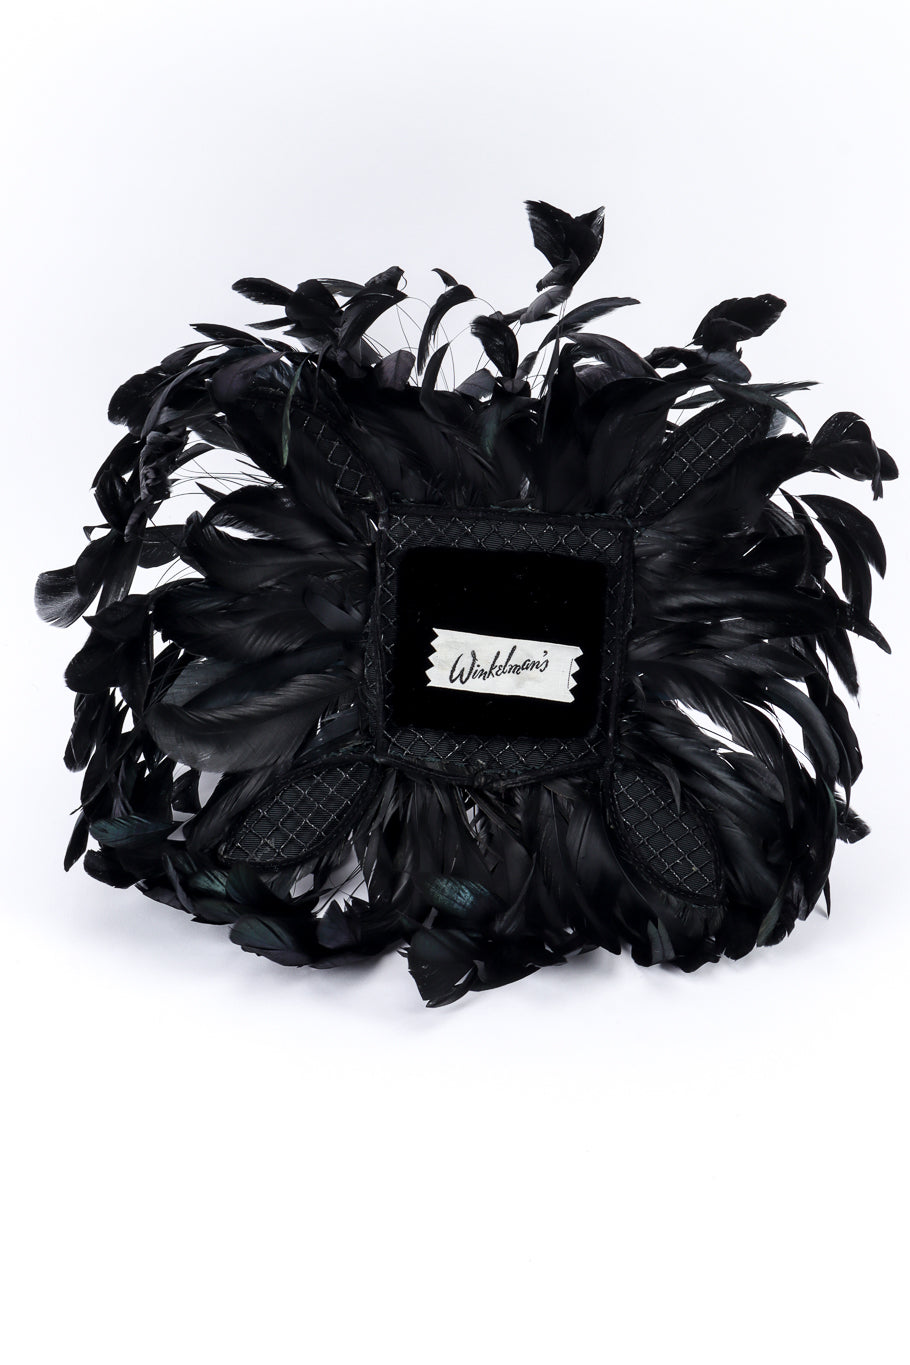 Raven Feather Fascinator Hat by Winkelman's bottom @recessla